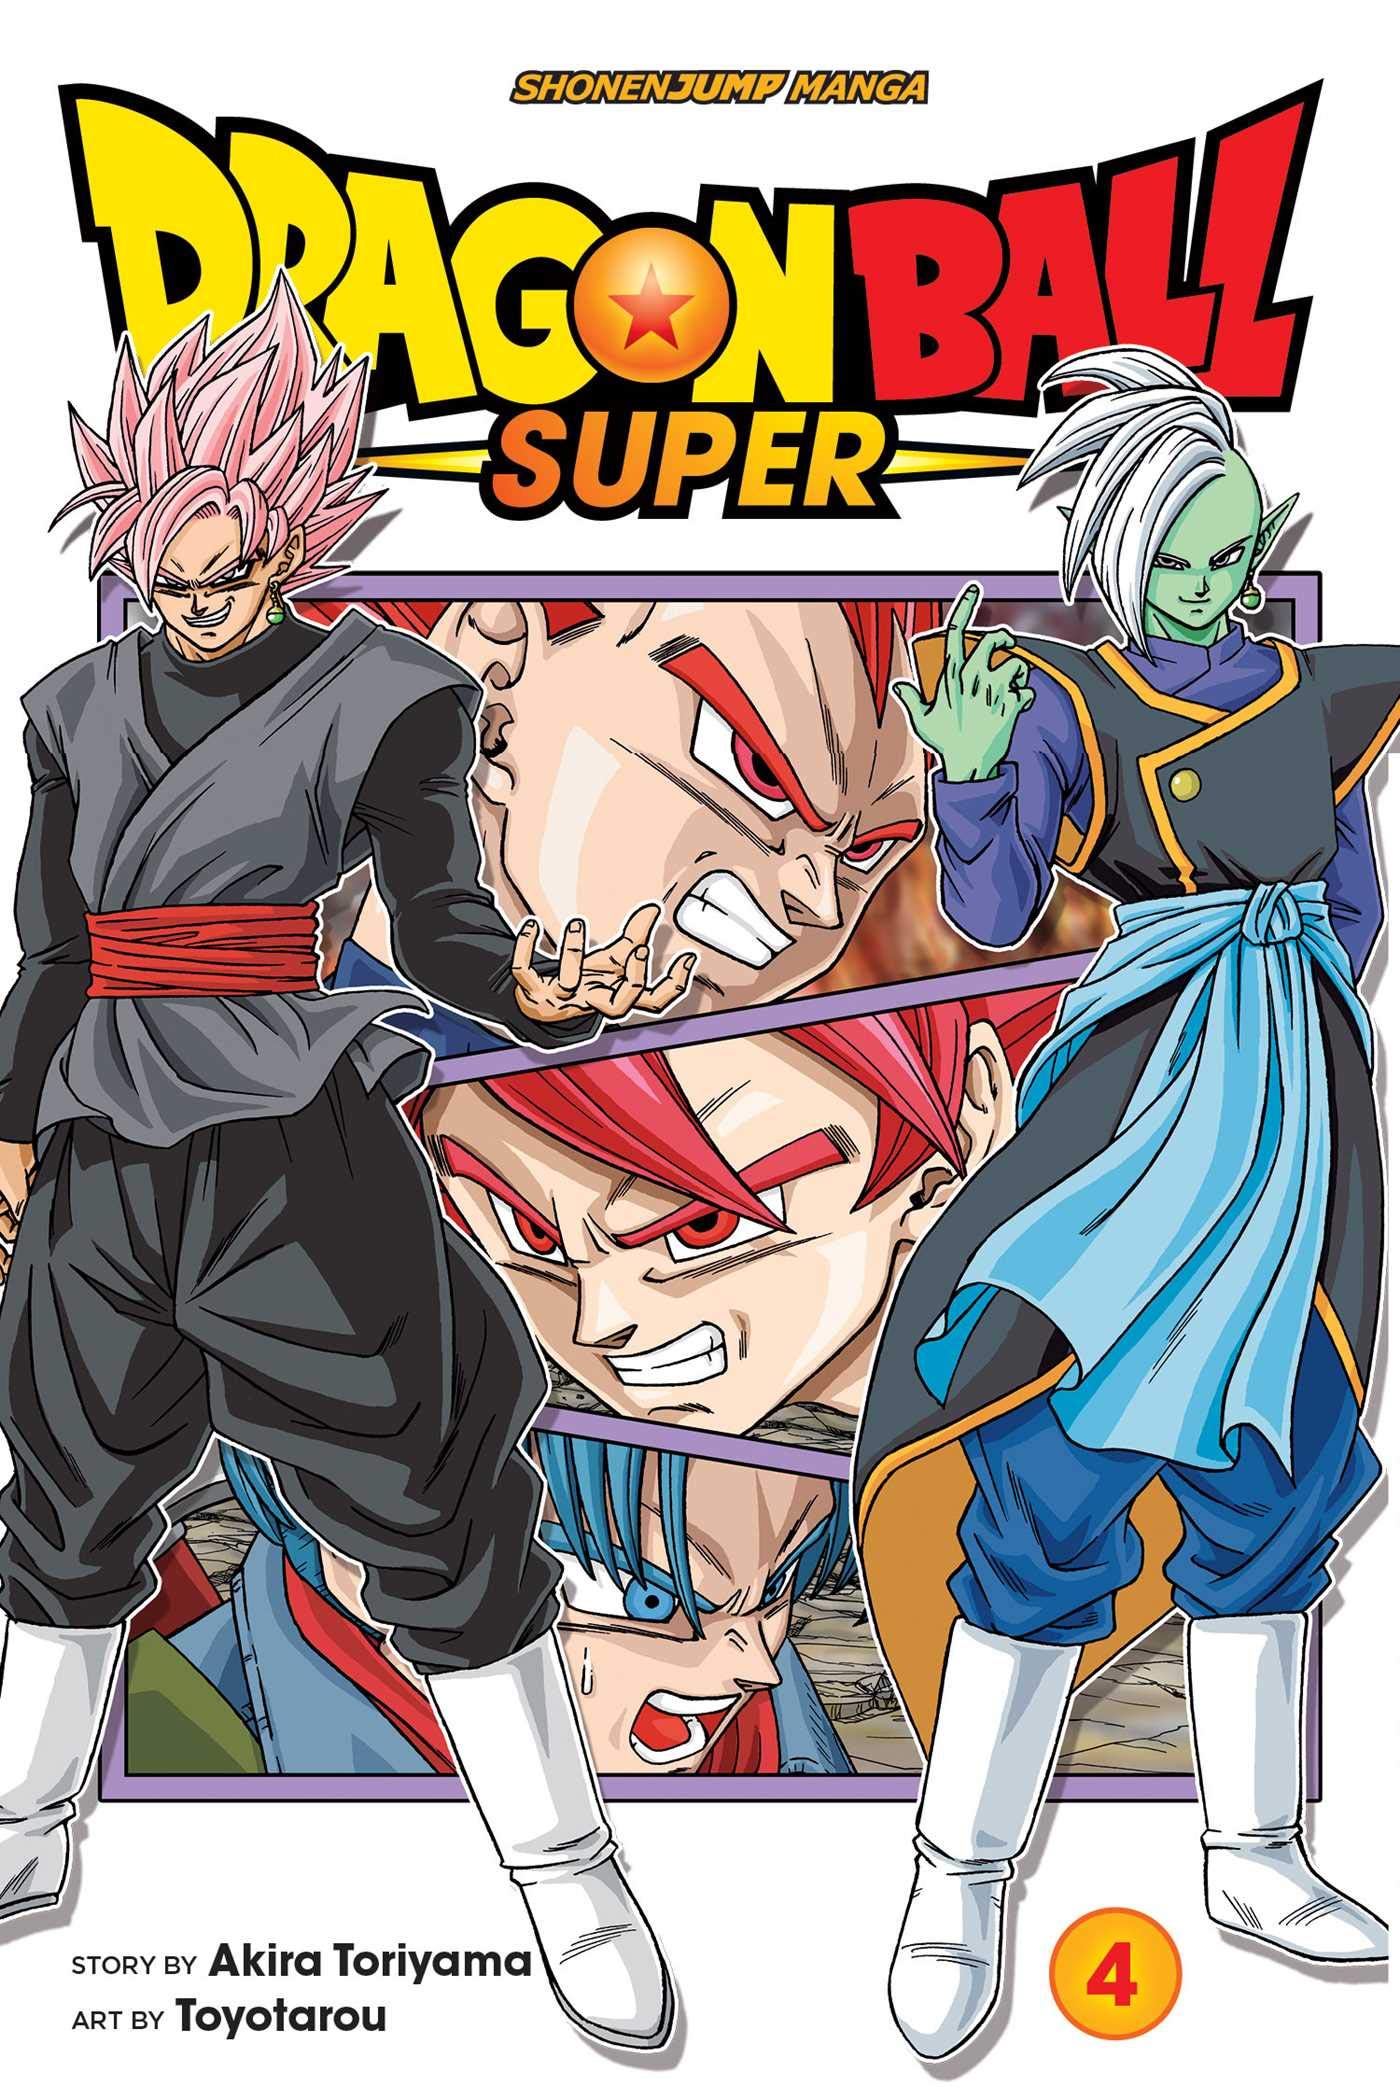 Cover for season 2 of DBS  Dragon ball super, Dragon ball, Dragon ball  super manga